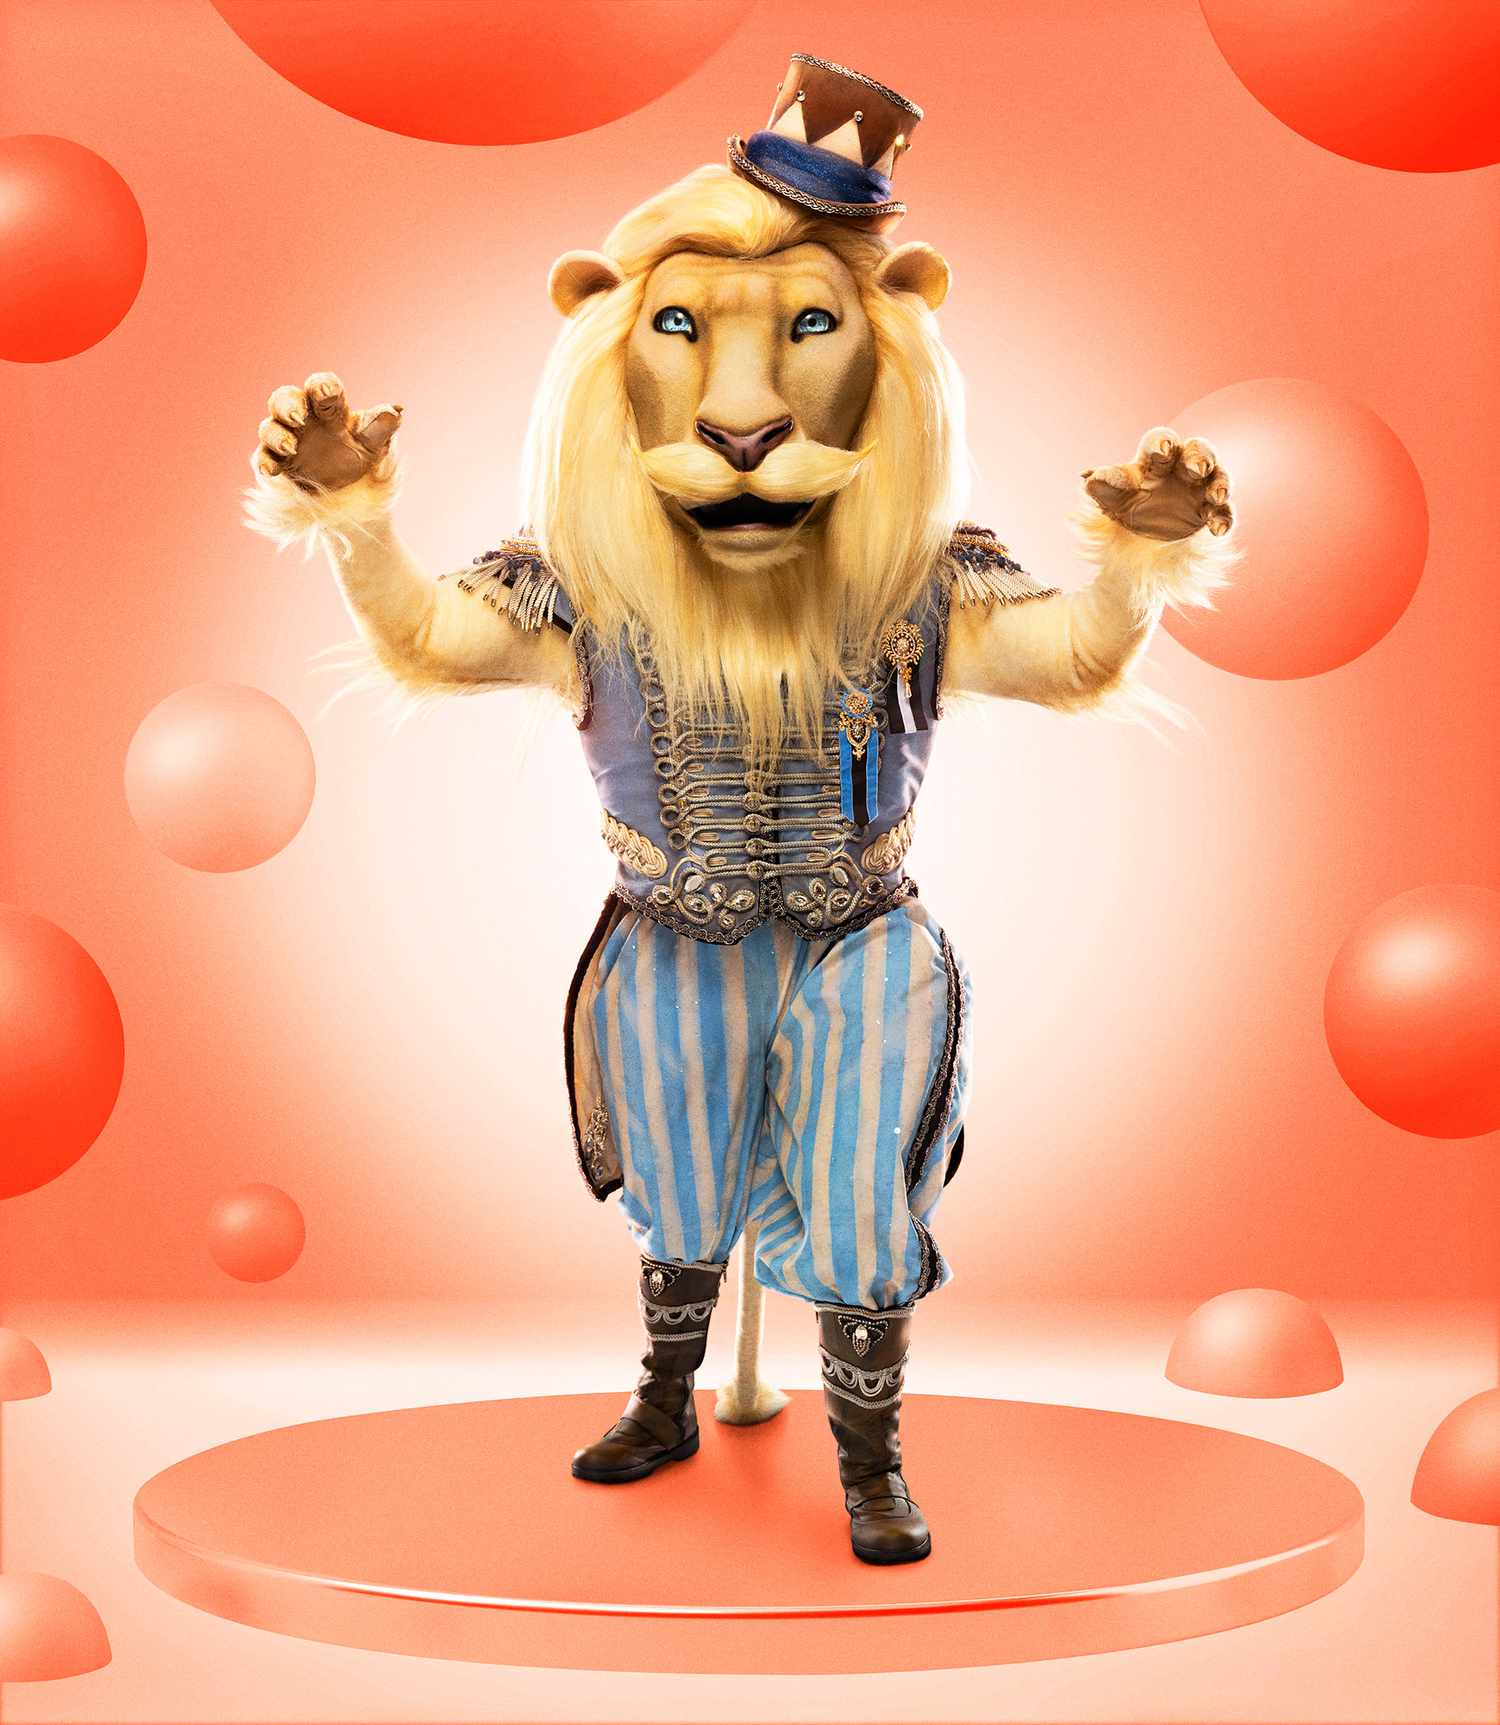 Sir Lion The Masked Singer